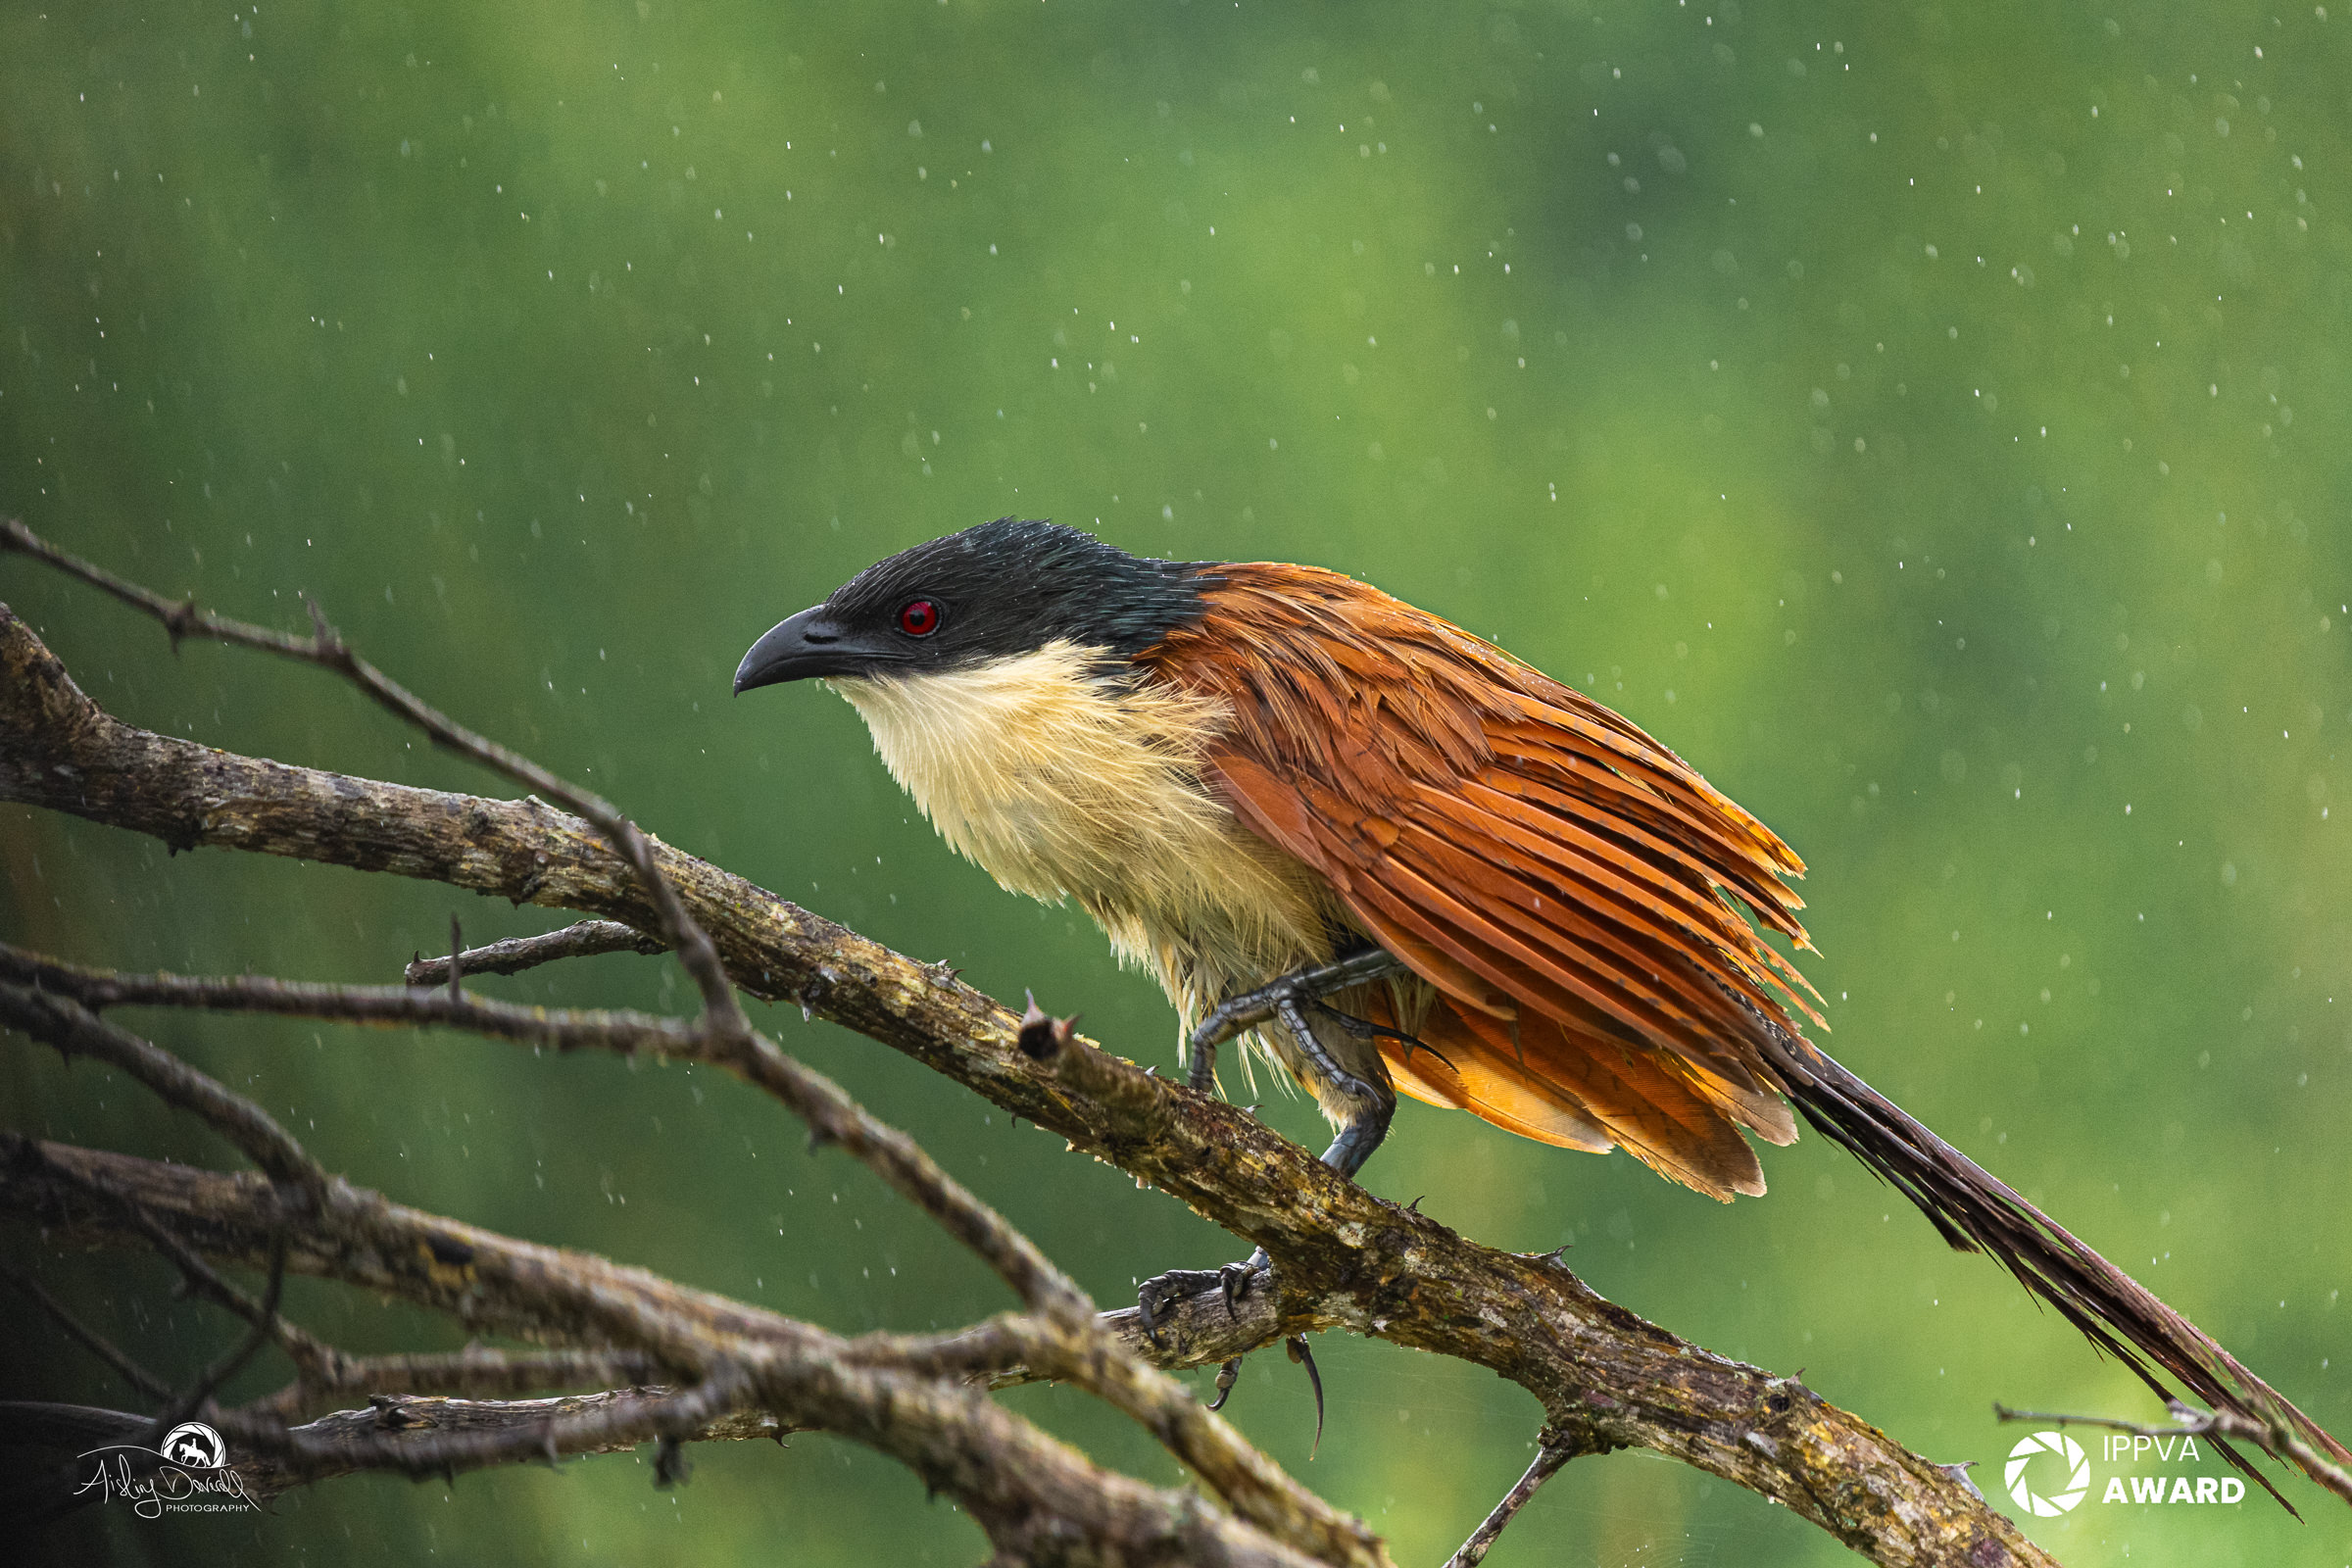 IPPVA award winning photo of a Burchell's Coucal bird in the rain